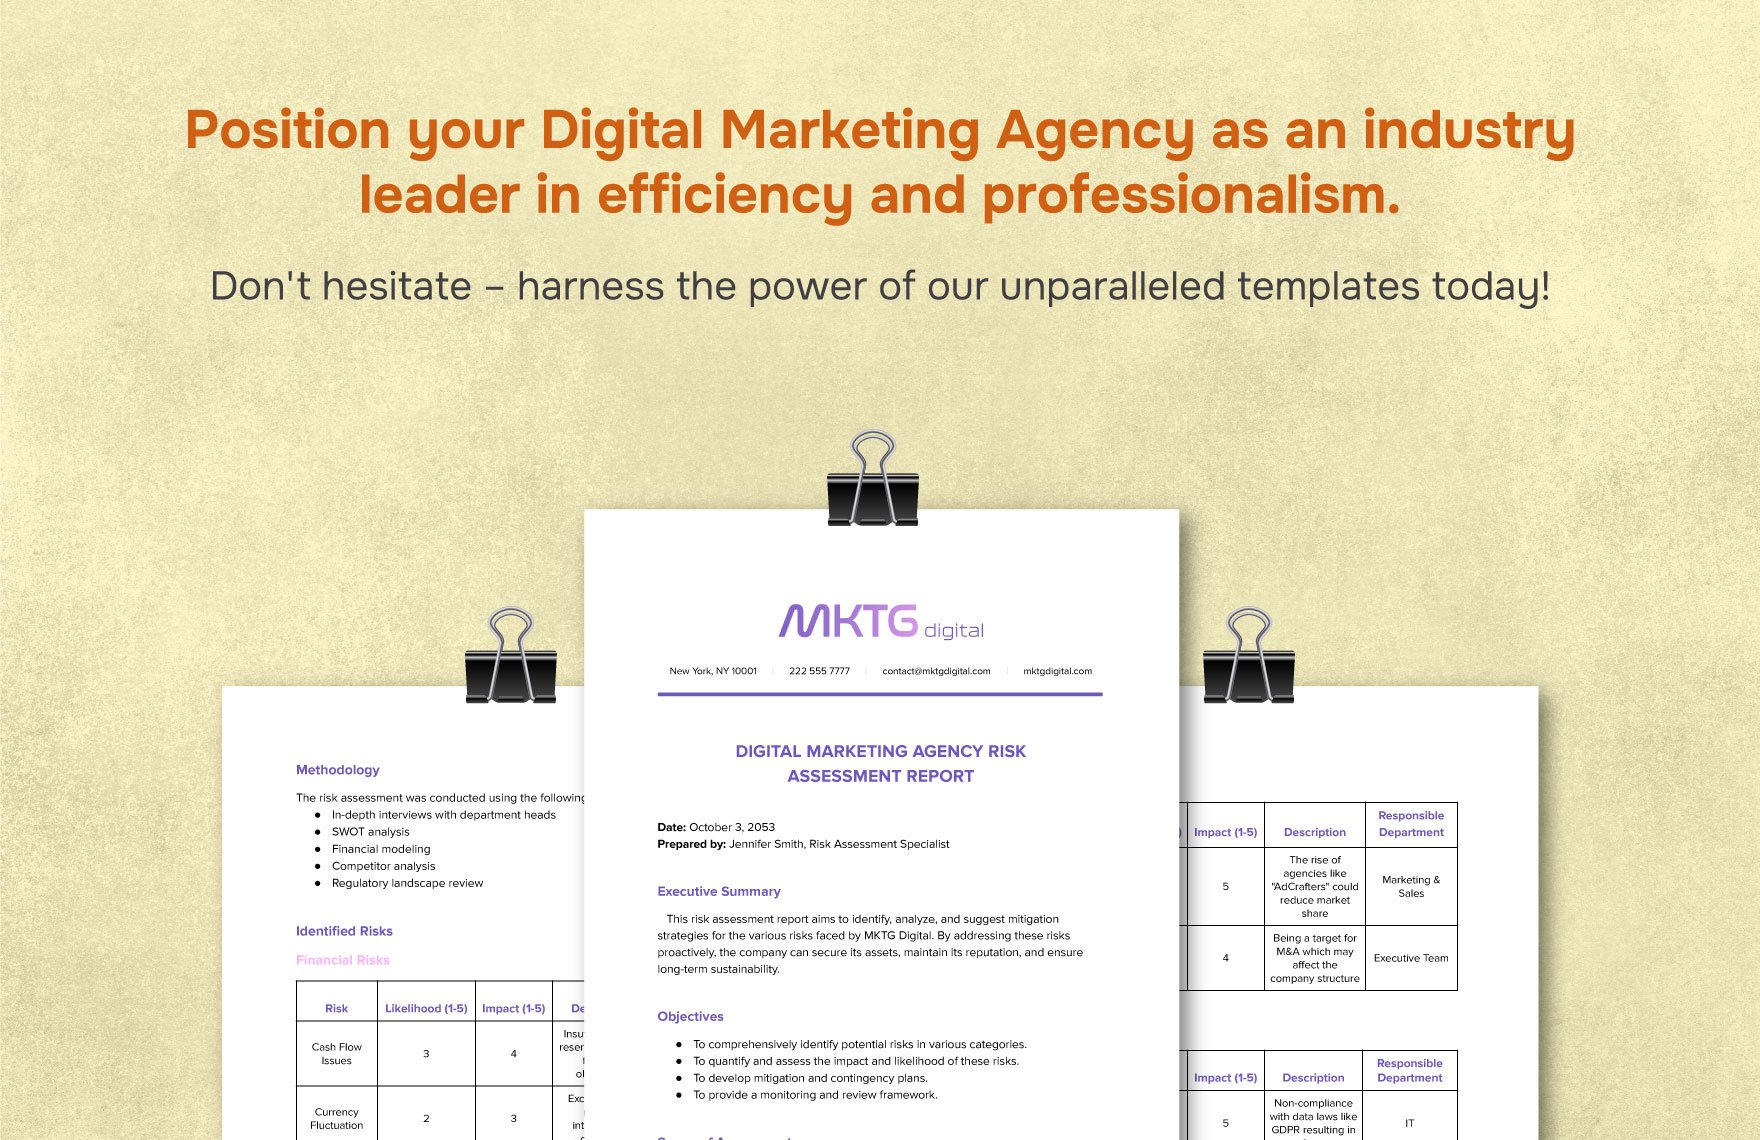 Digital Marketing Agency Risk Assessment Report Template